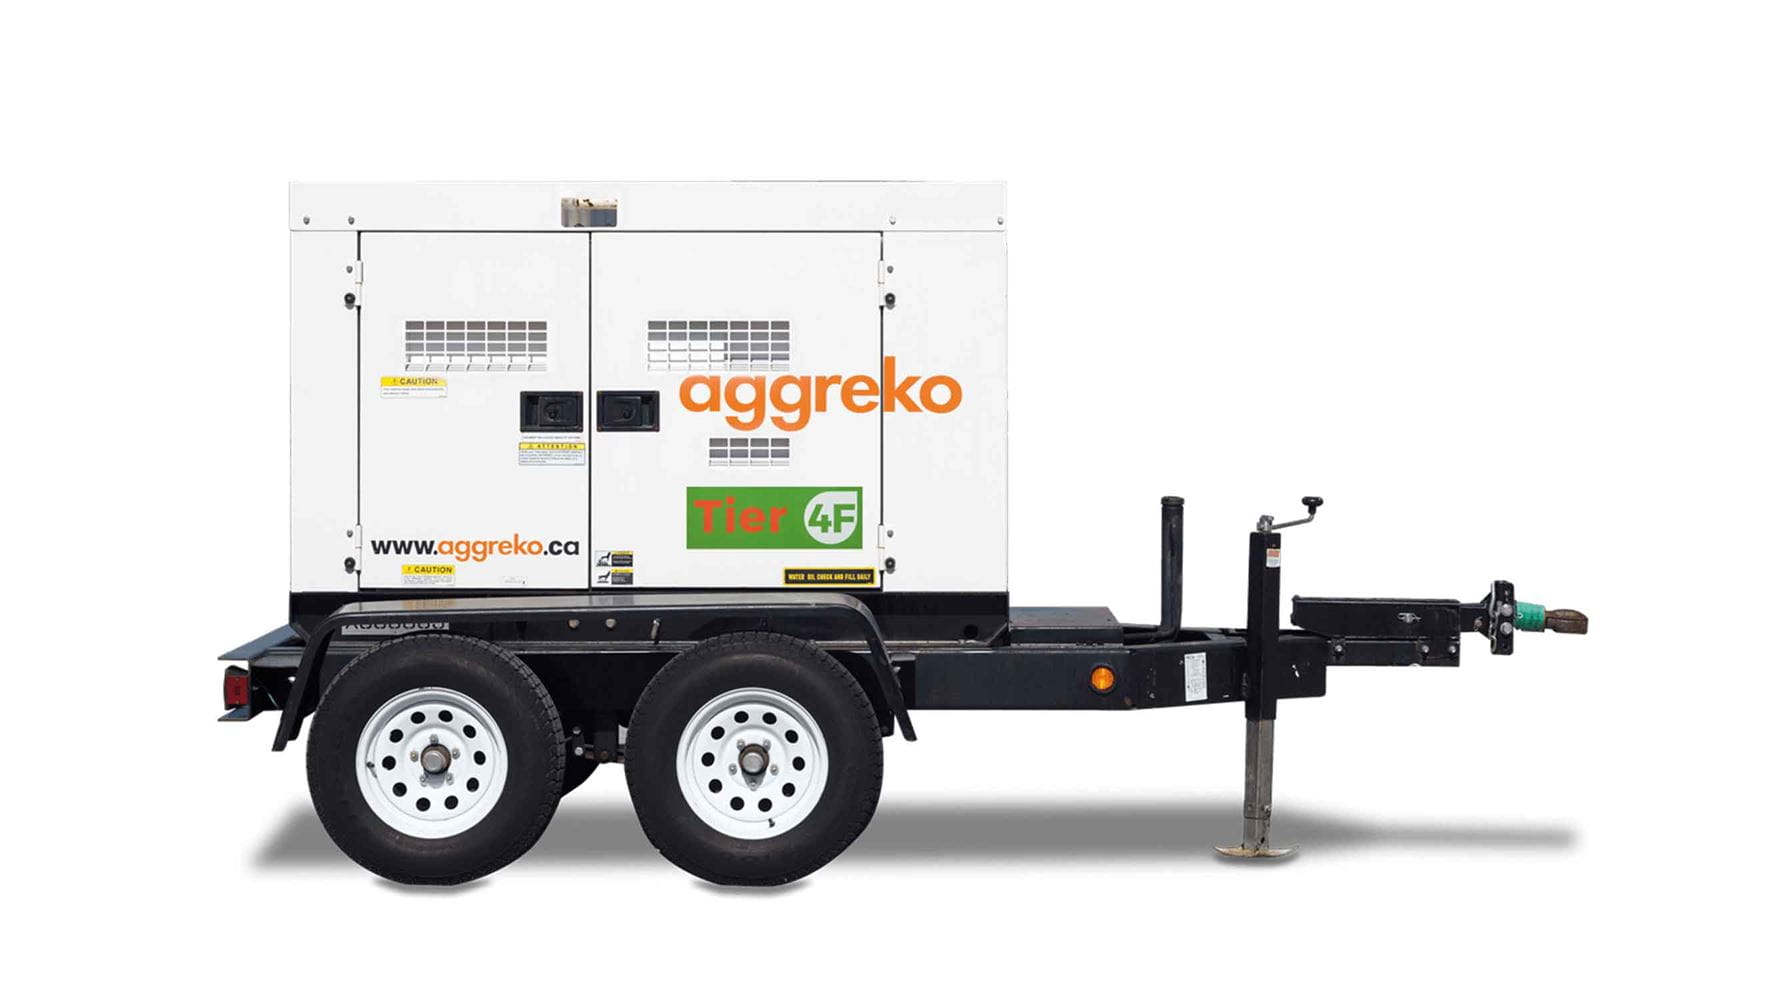 60 kW Tier 4F diesel generator